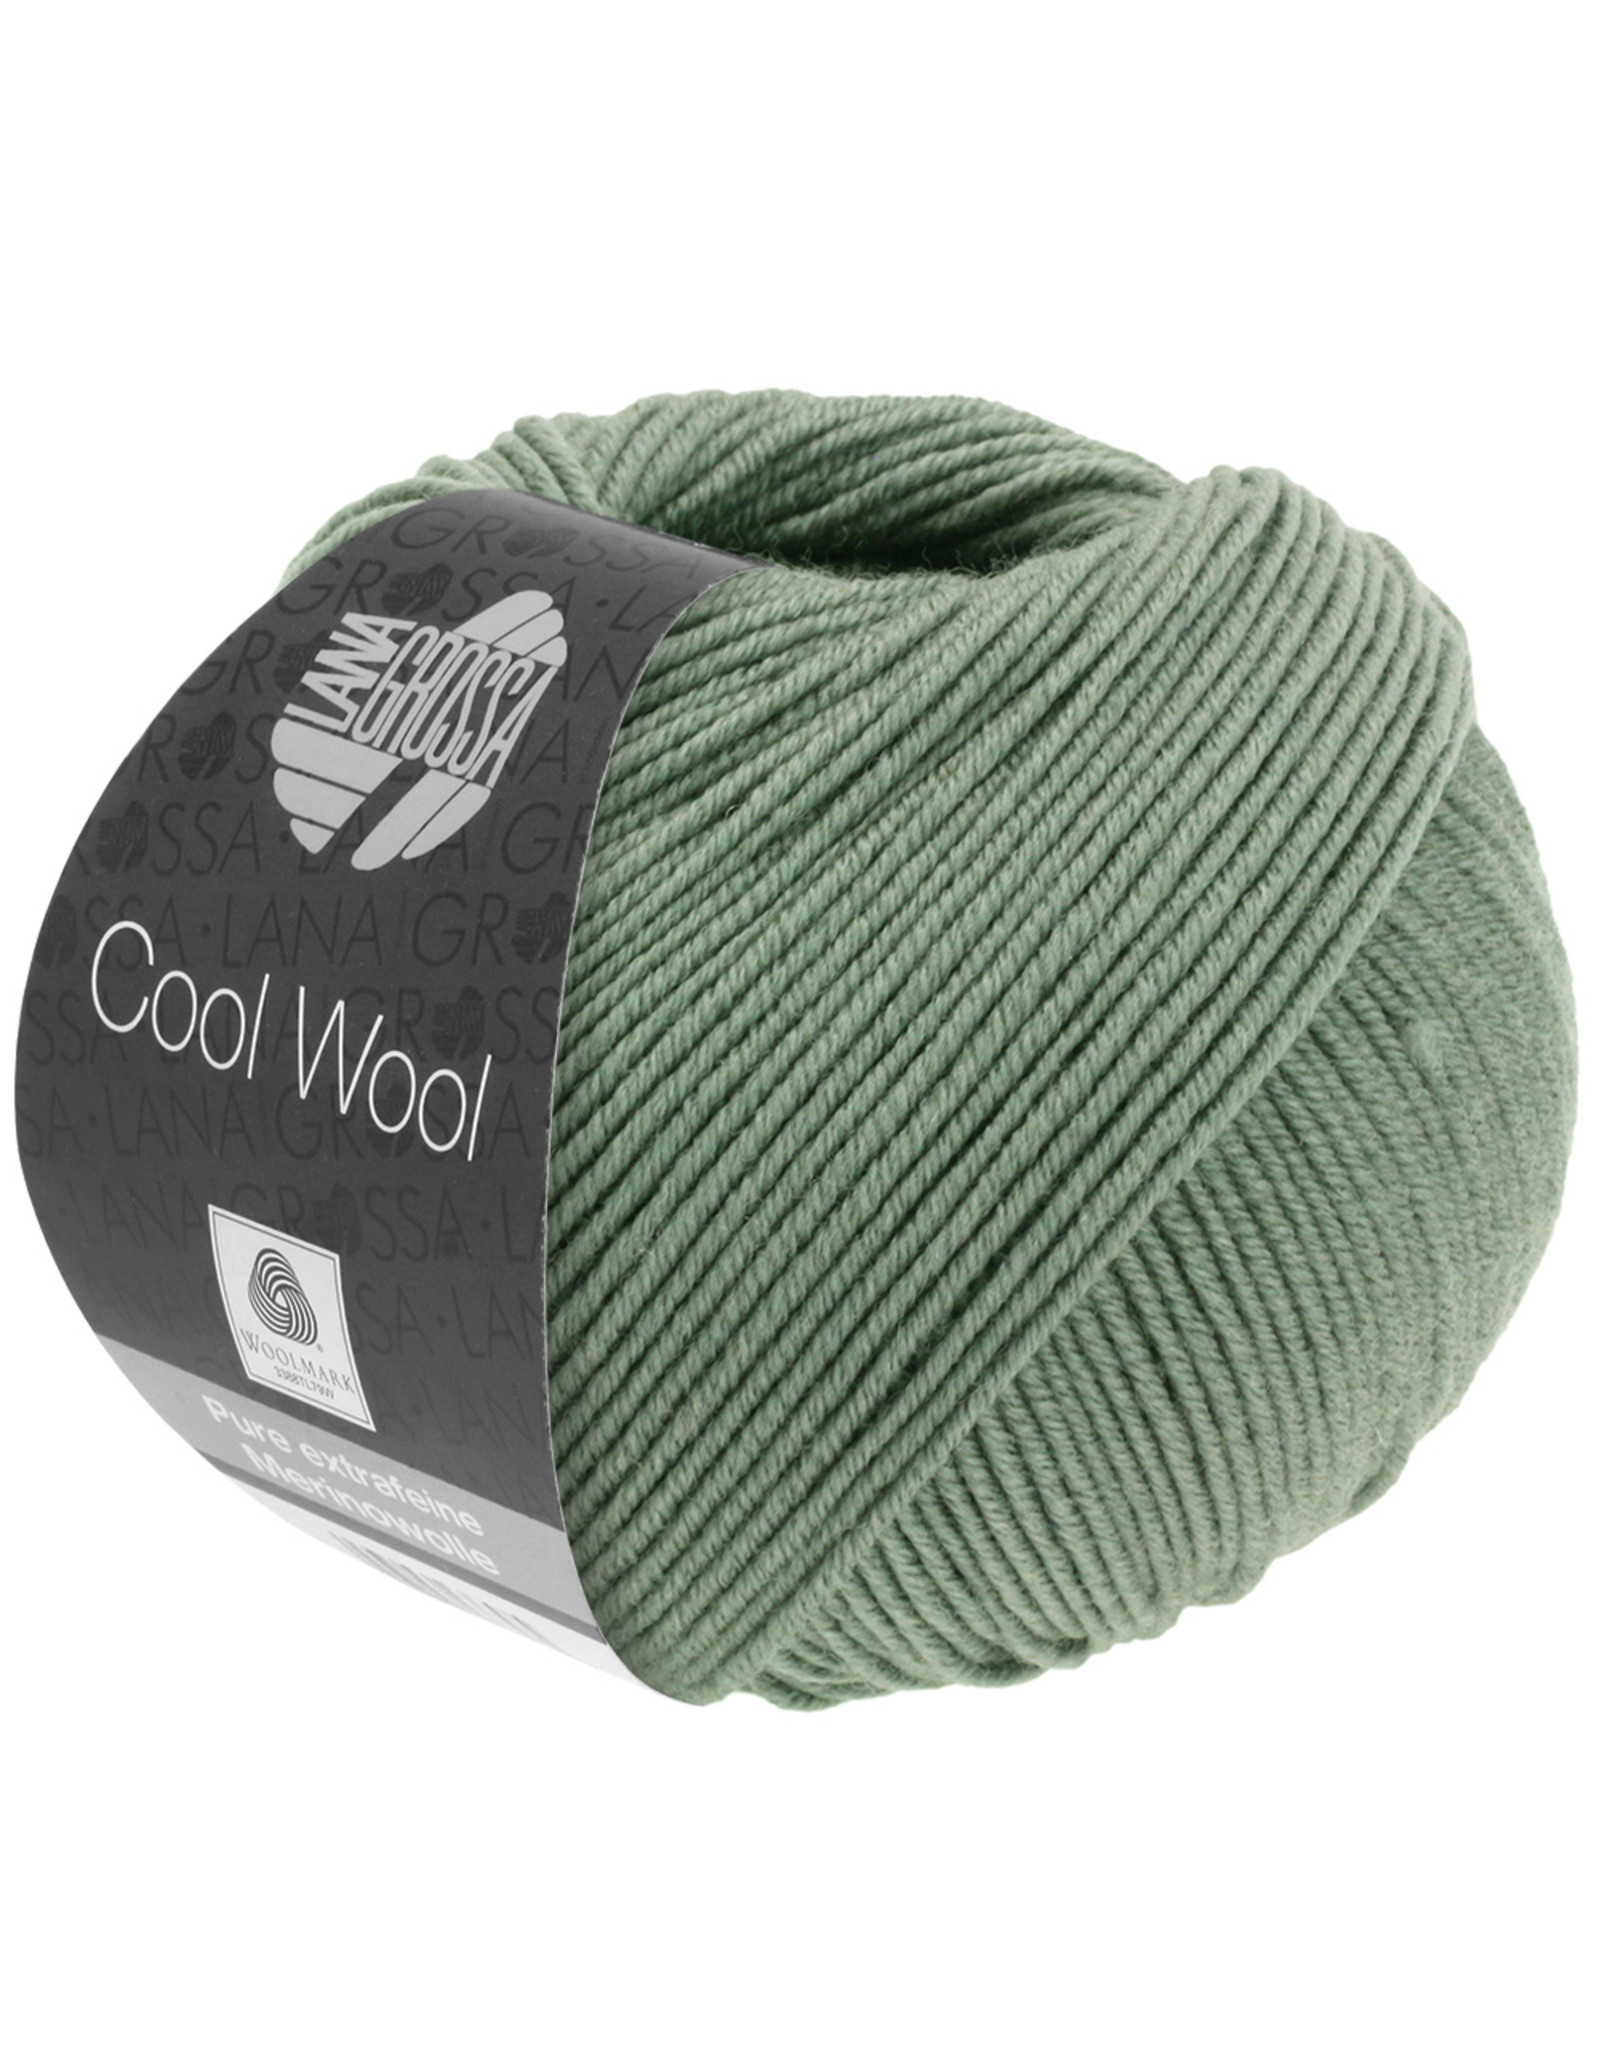 Lana Grossa Lana Grossa Cool wool 2079